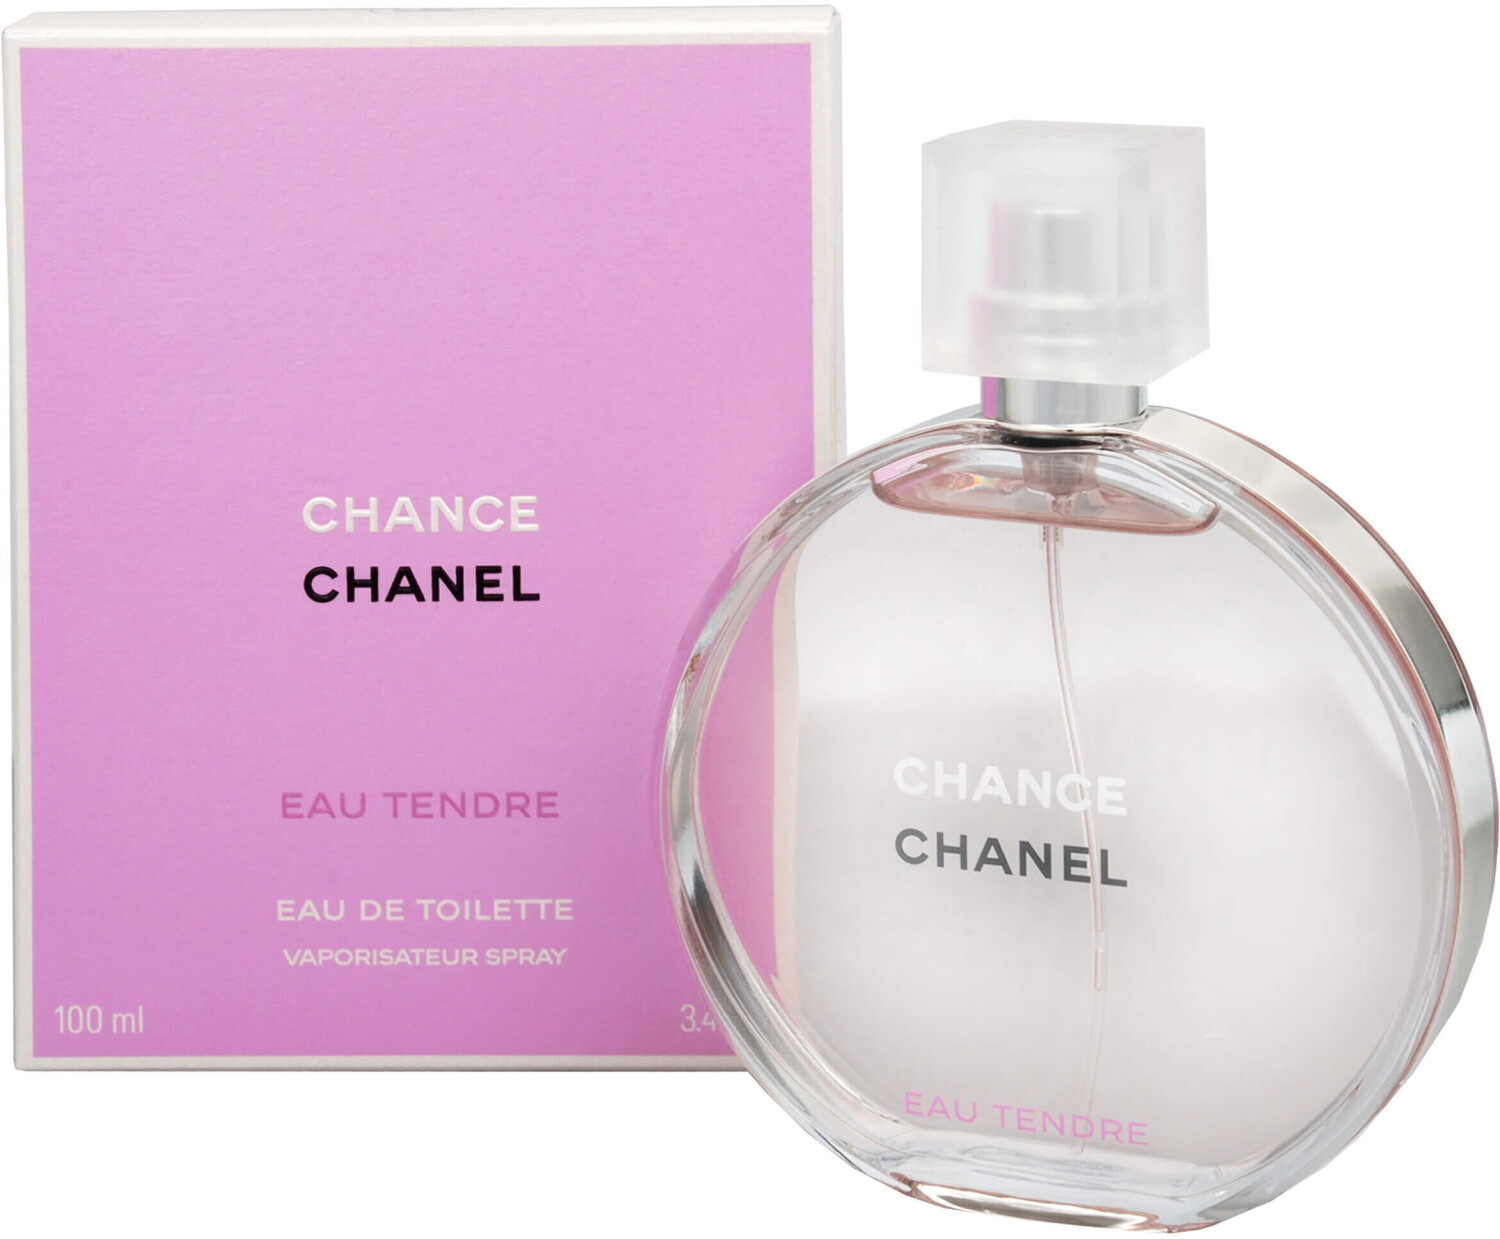 Chanel Allure eau de toilette for women 100 ml with spray - VMD parfumerie  - drogerie